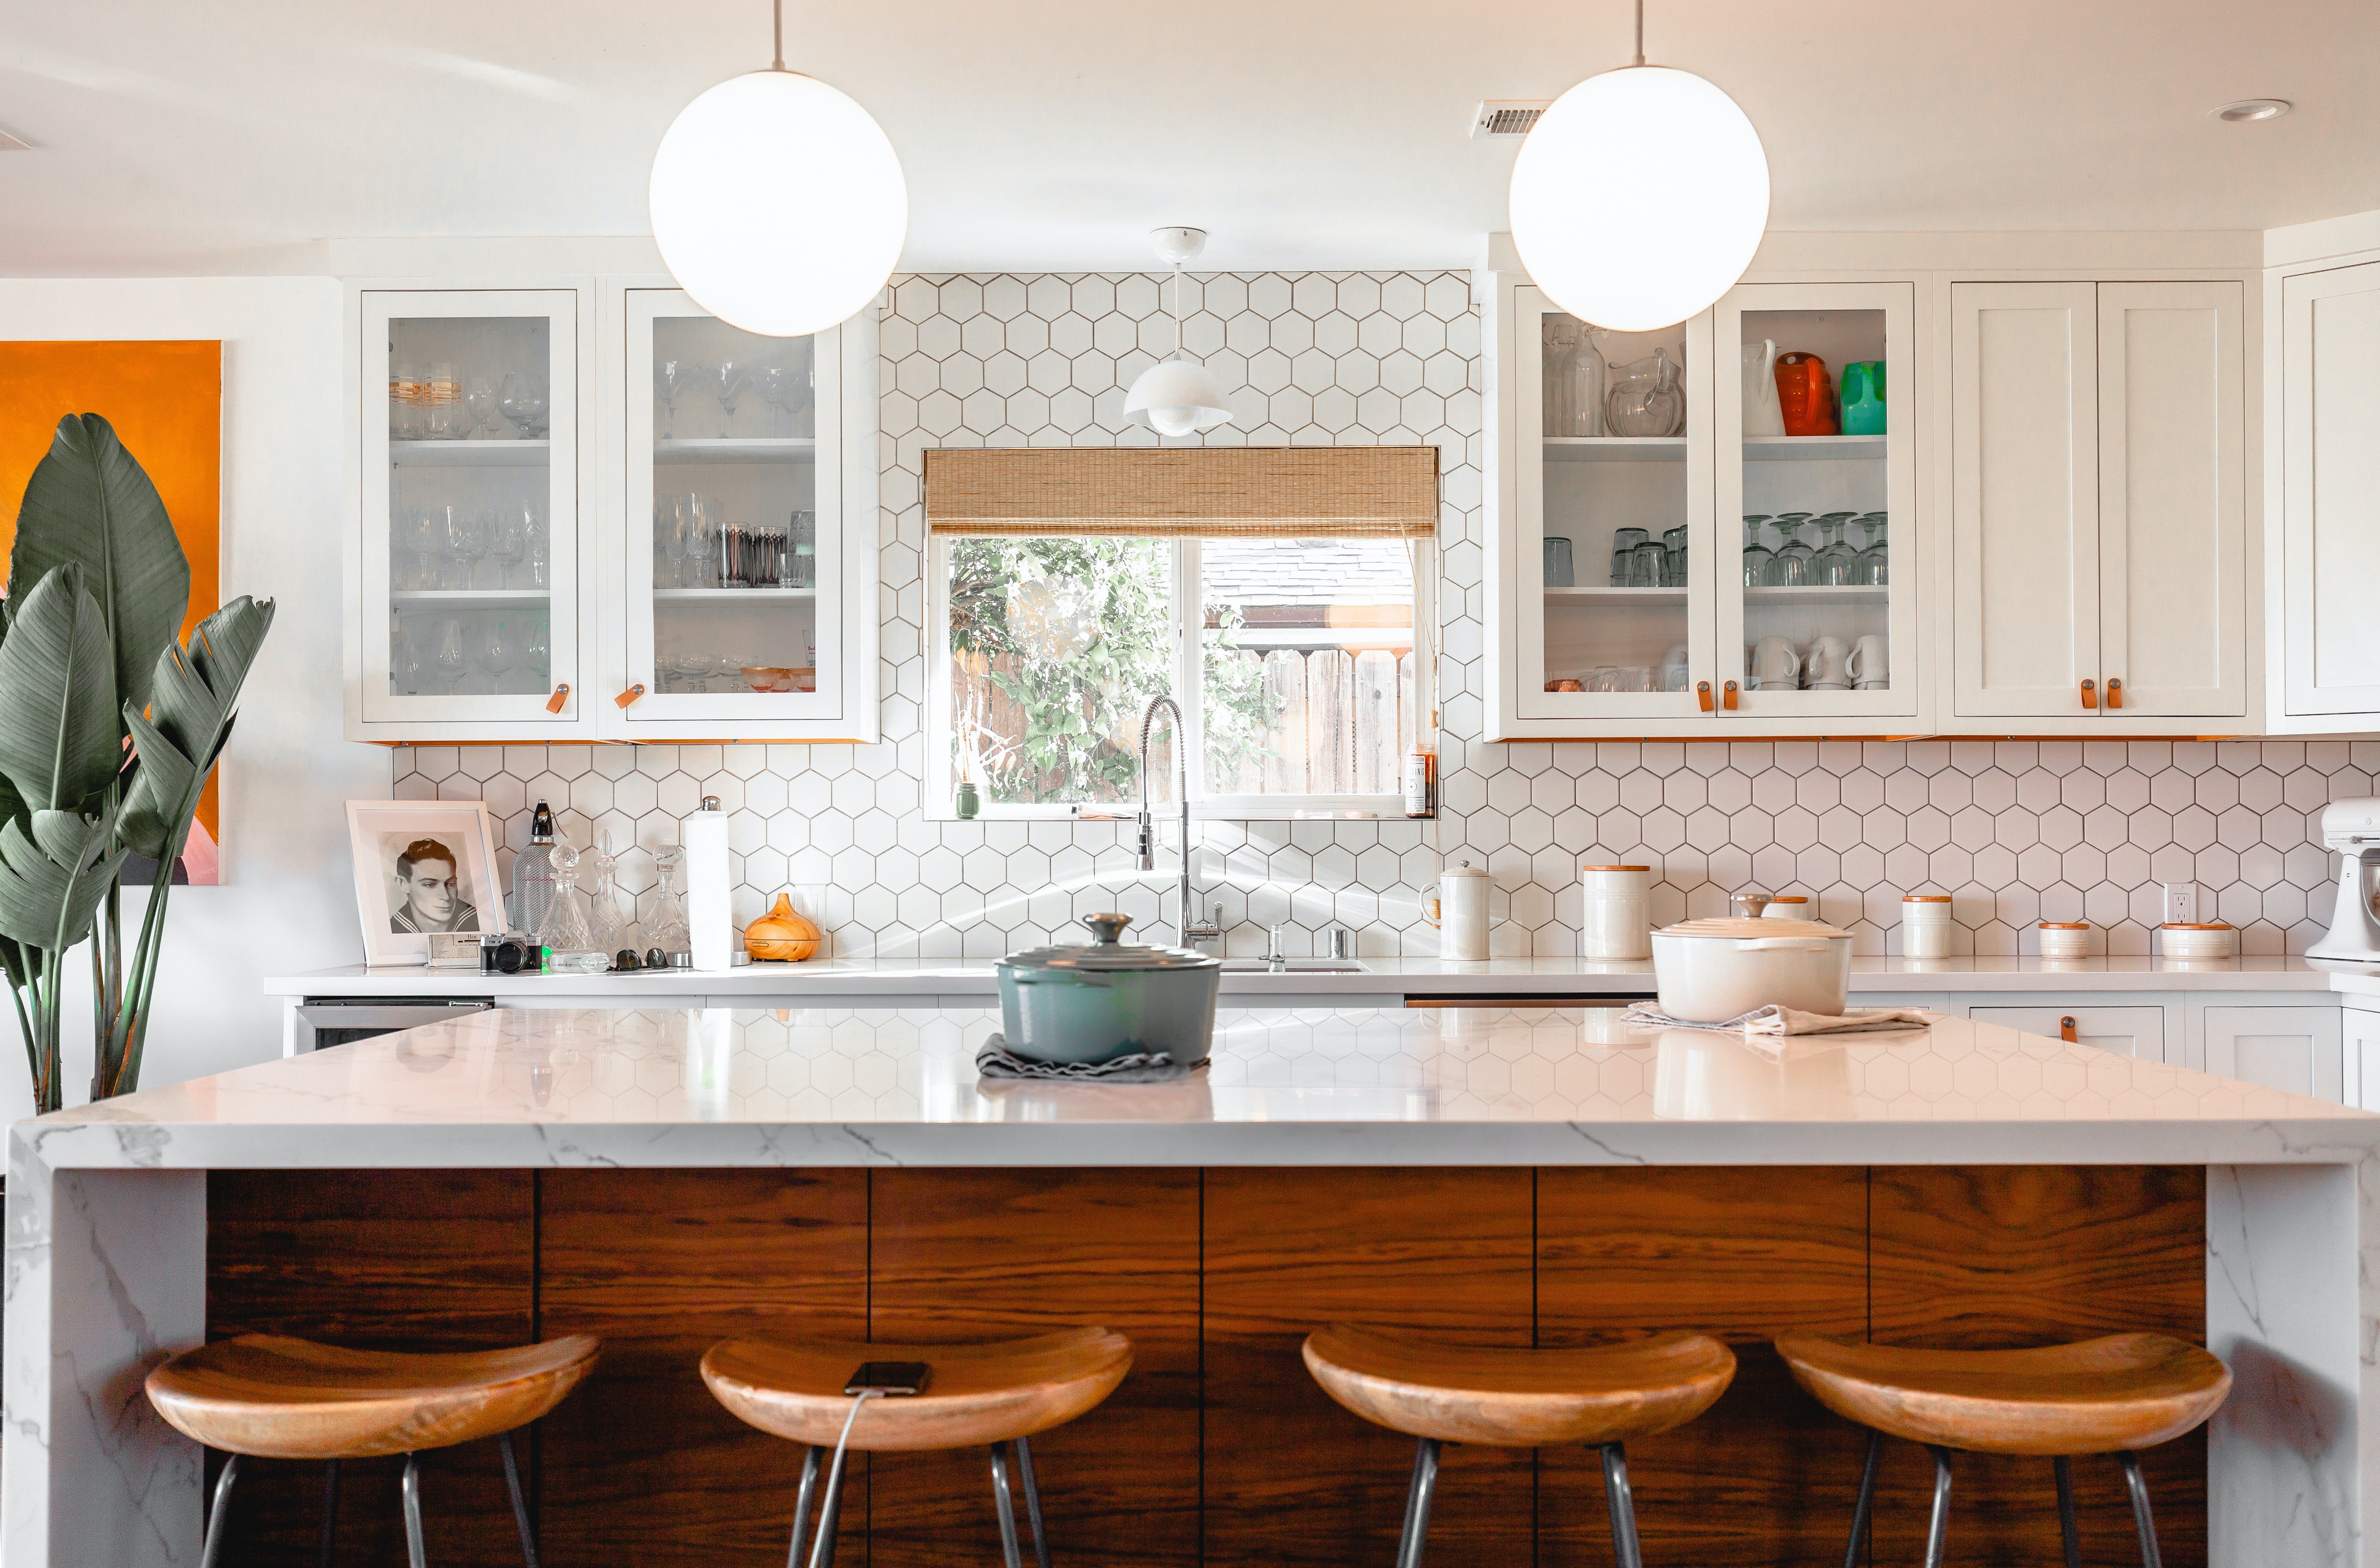 Find your ideal kitchen: Check the popular kitchen design ideas